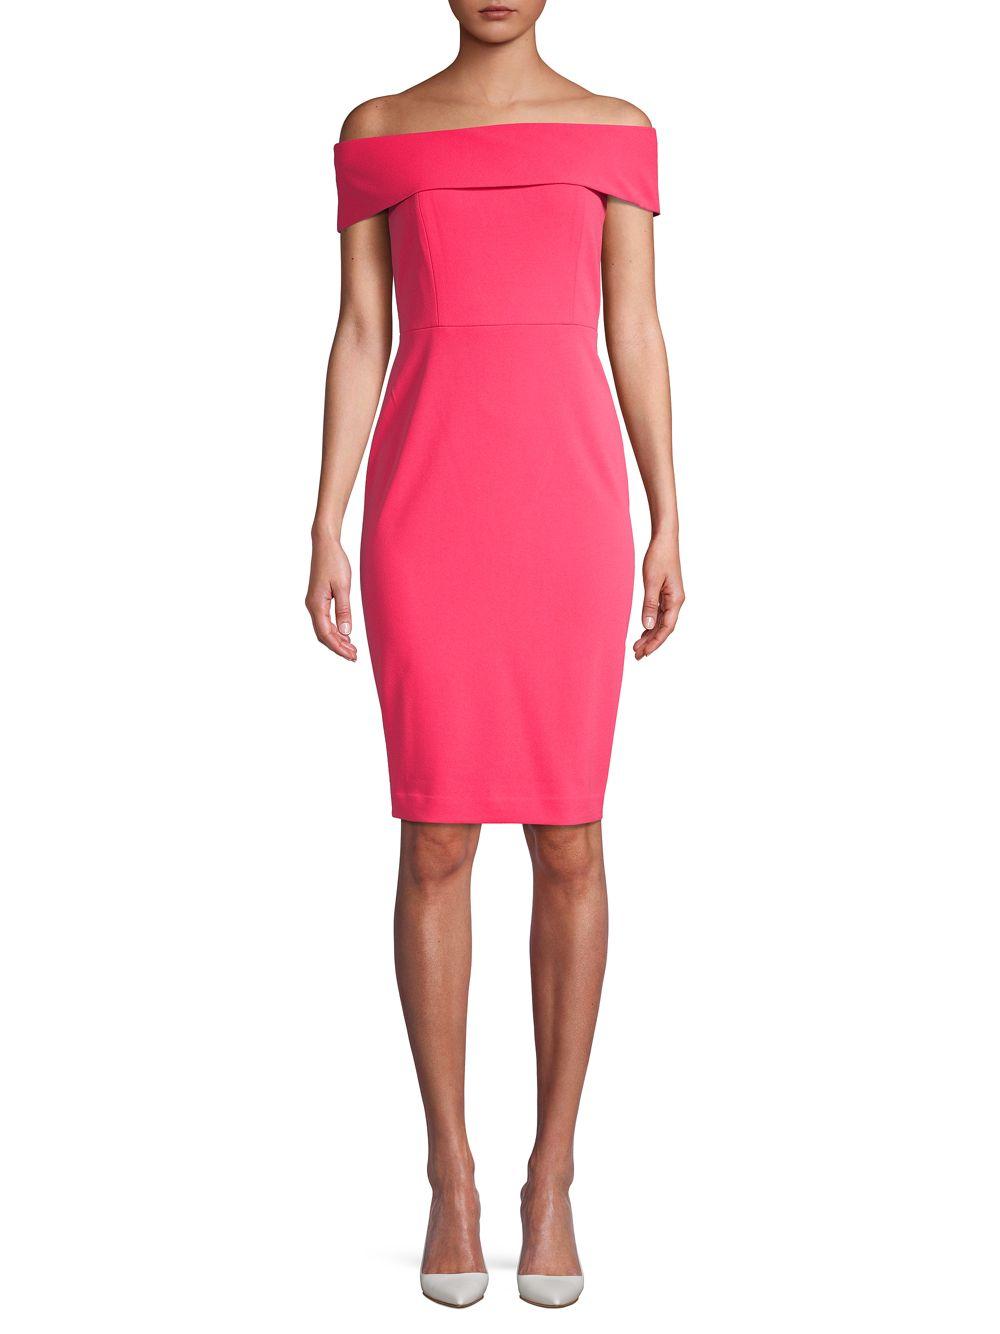 Lyst - Calvin Klein Off-the-shoulder Sheath Dress in Pink